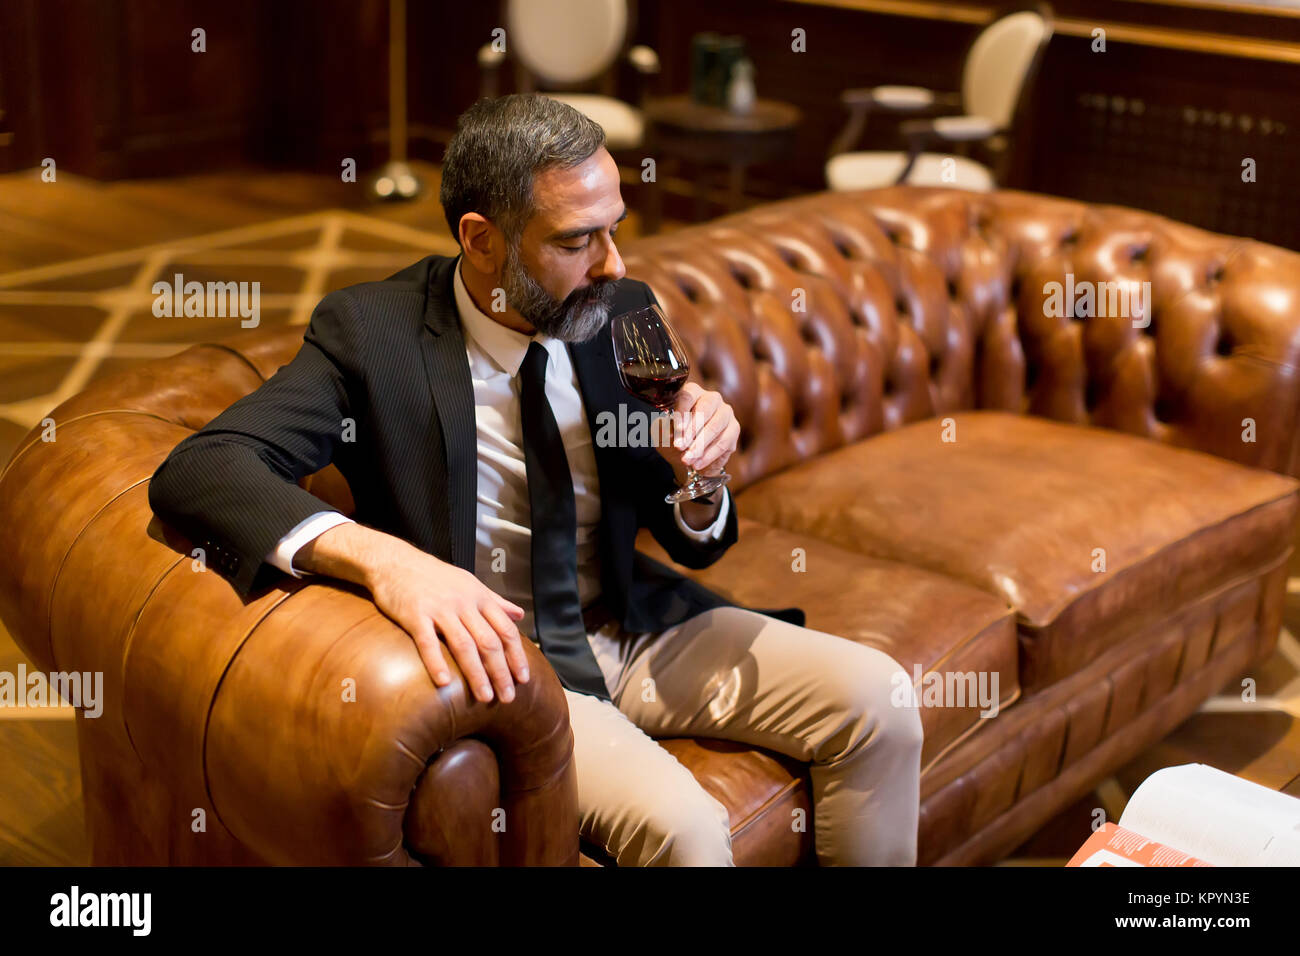 Beau elegant businessman drinking red wine in bar Banque D'Images